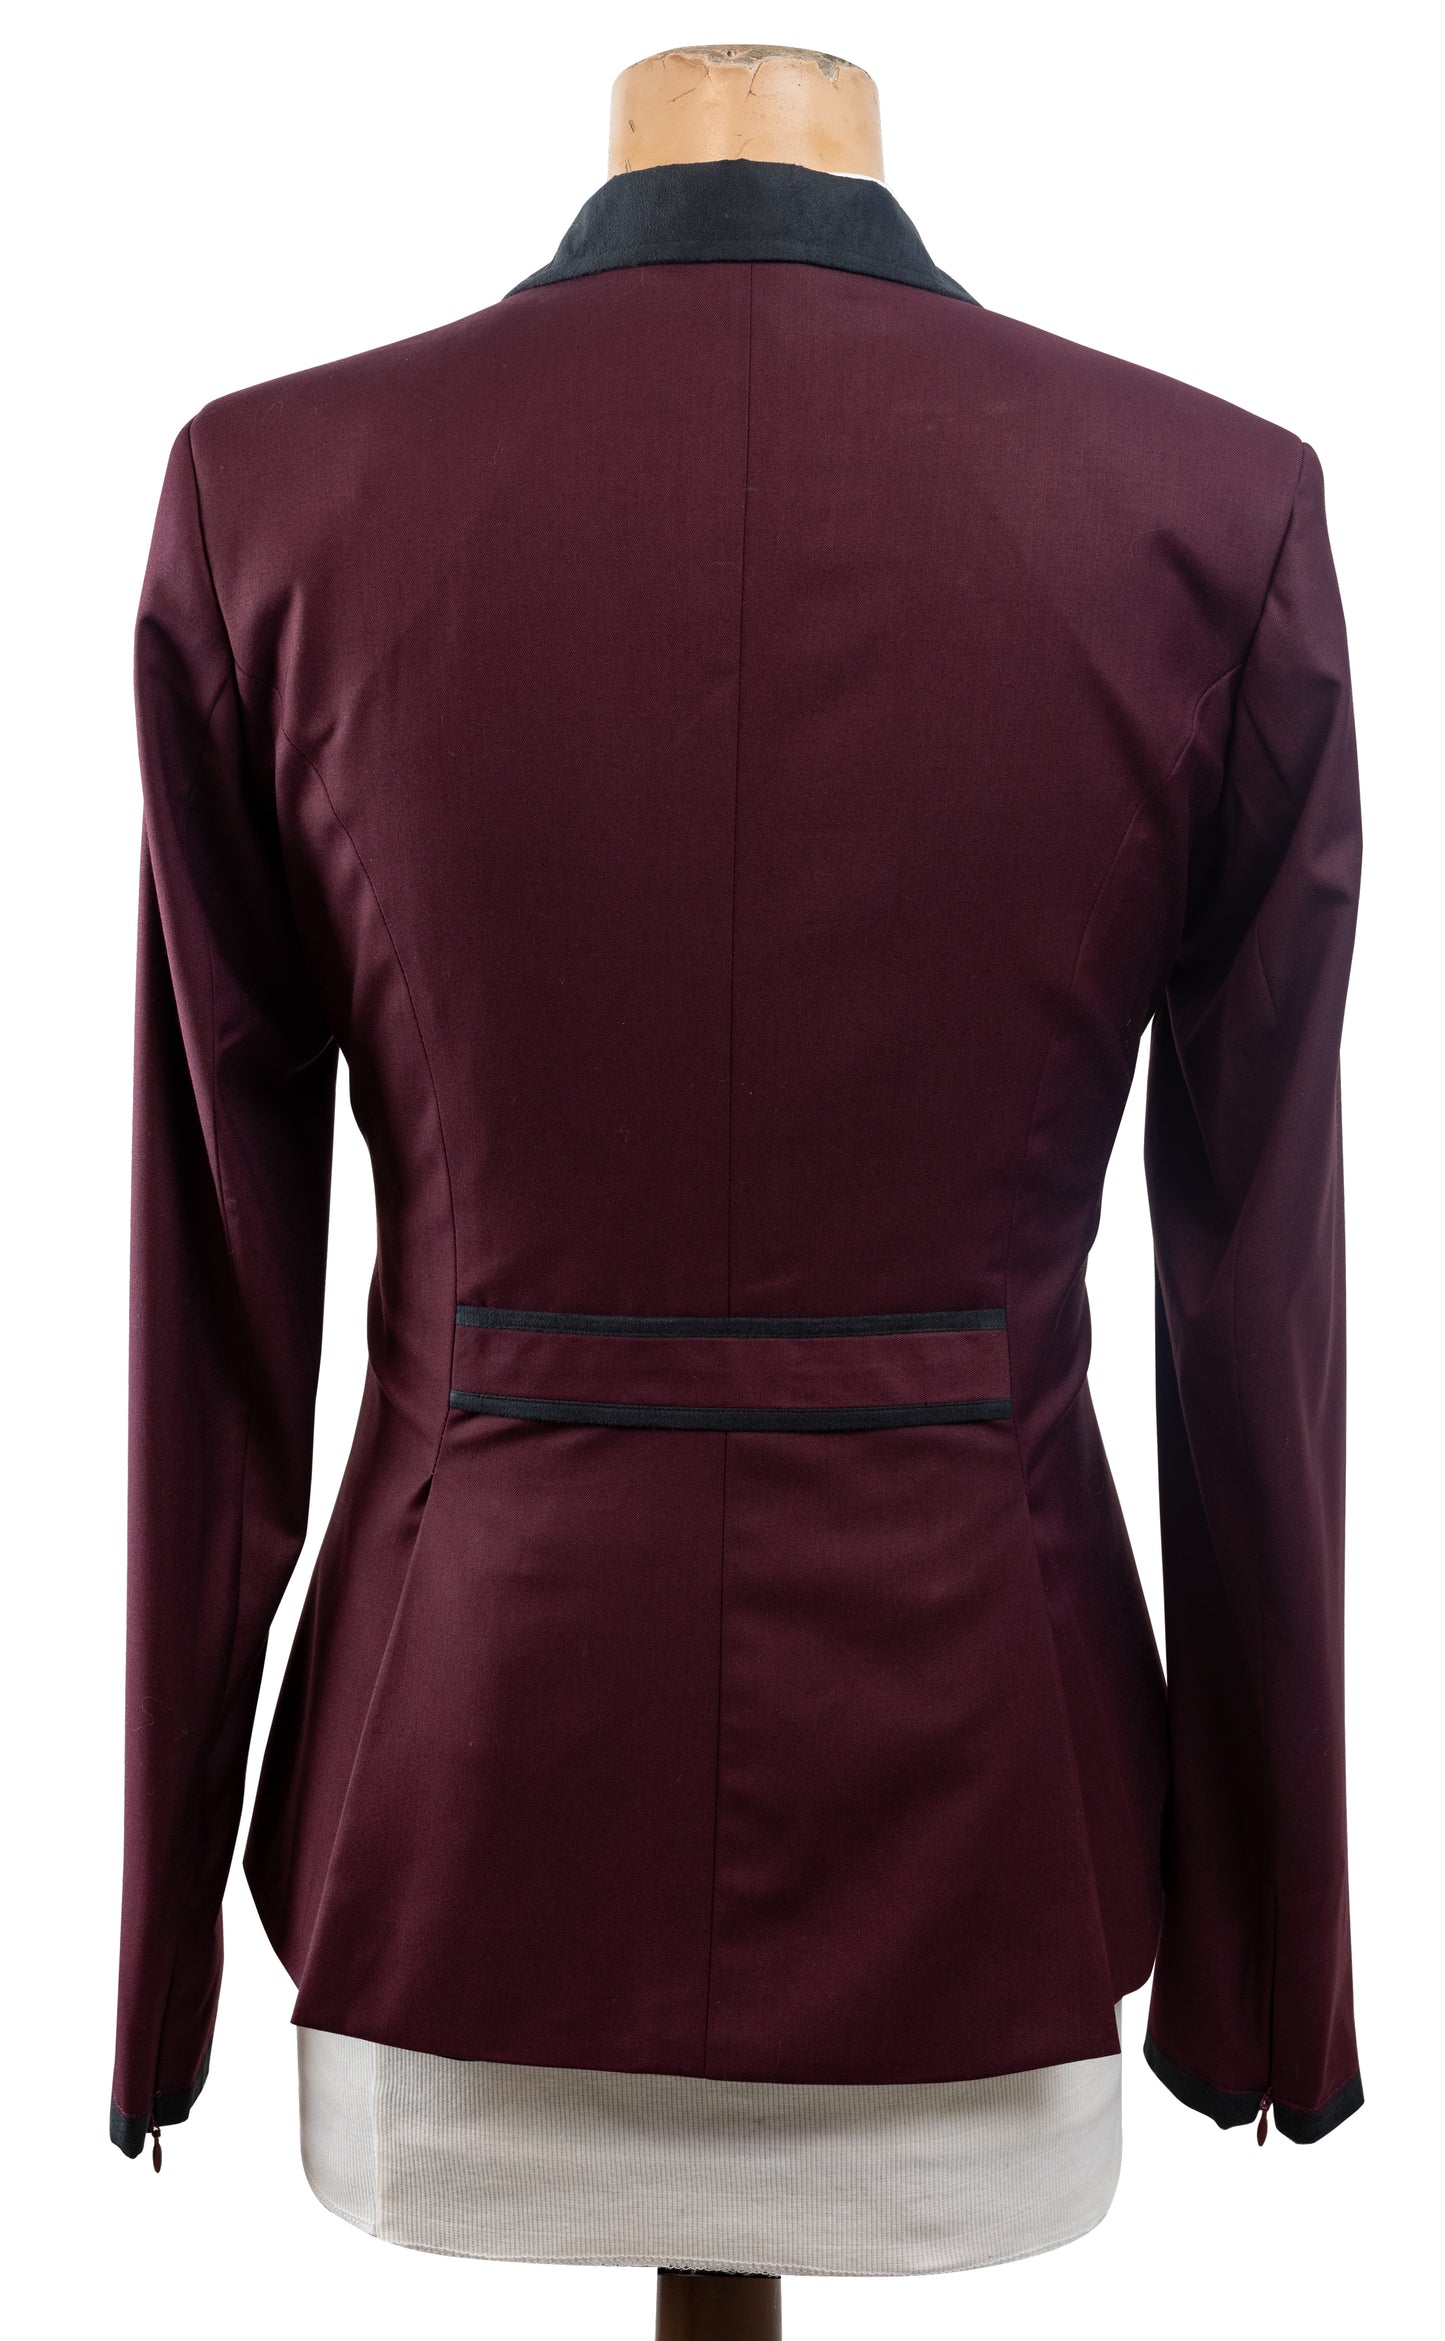 New Style Burgundy Stretch Jacket With Black Detail